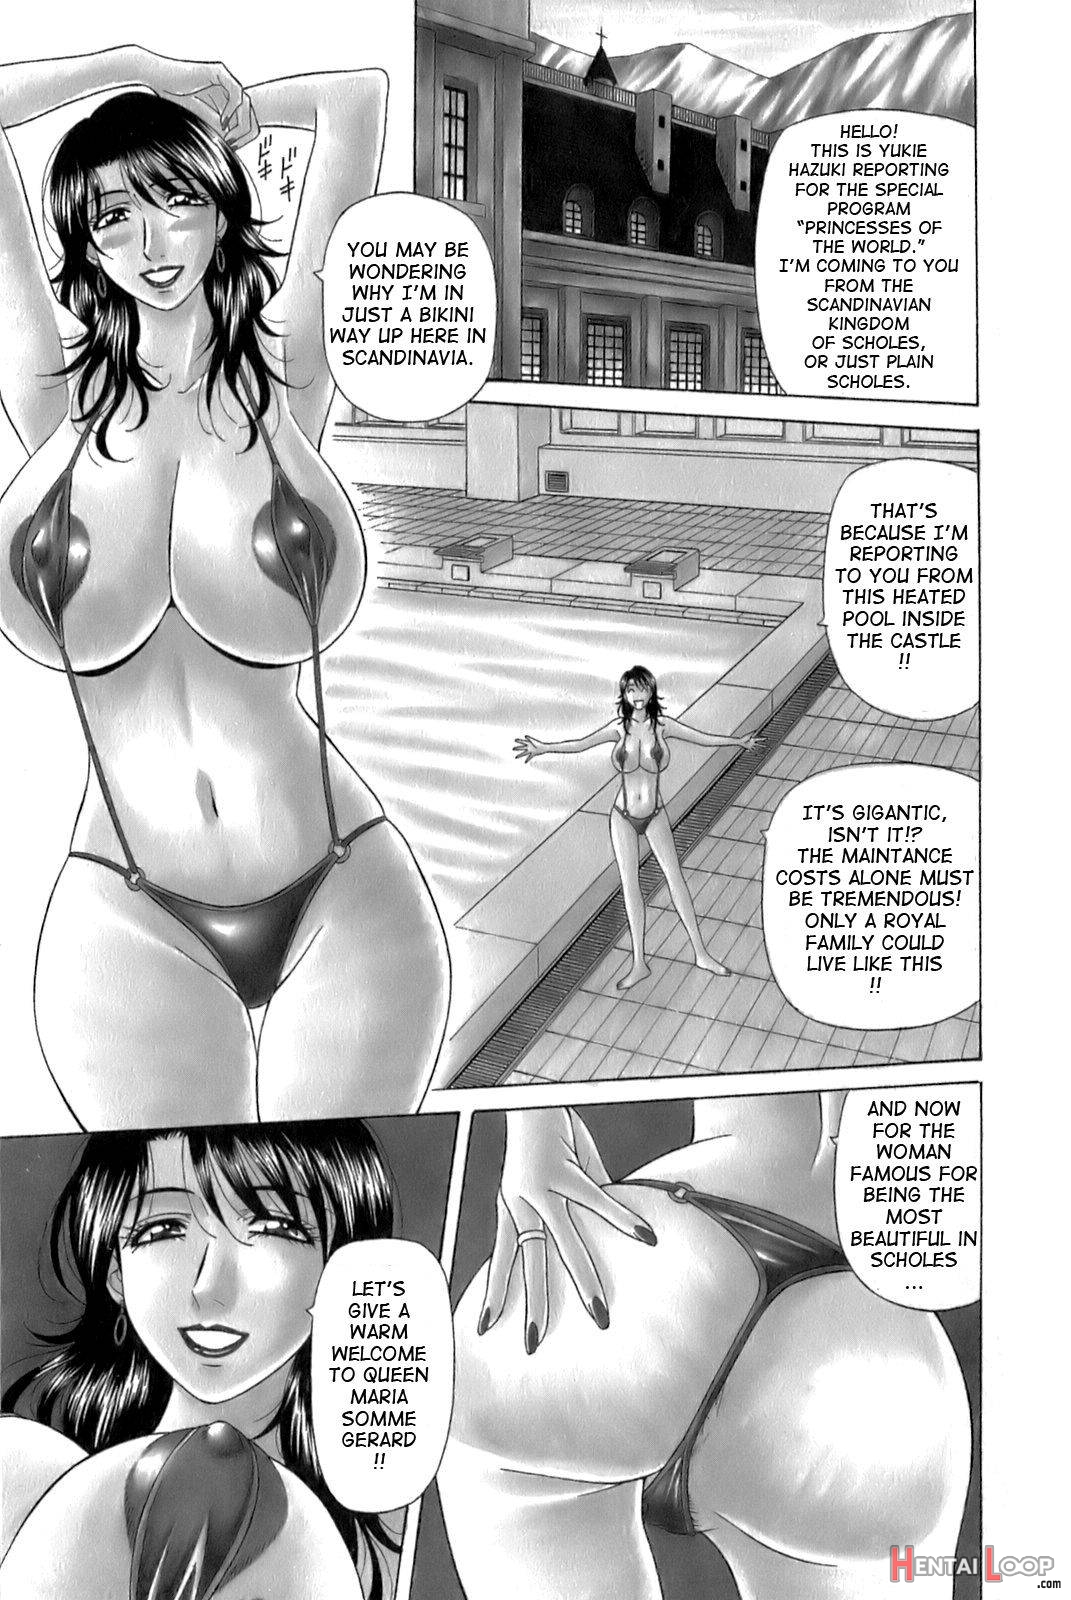 Dear Shitamachi Princess Vol. 1 page 3